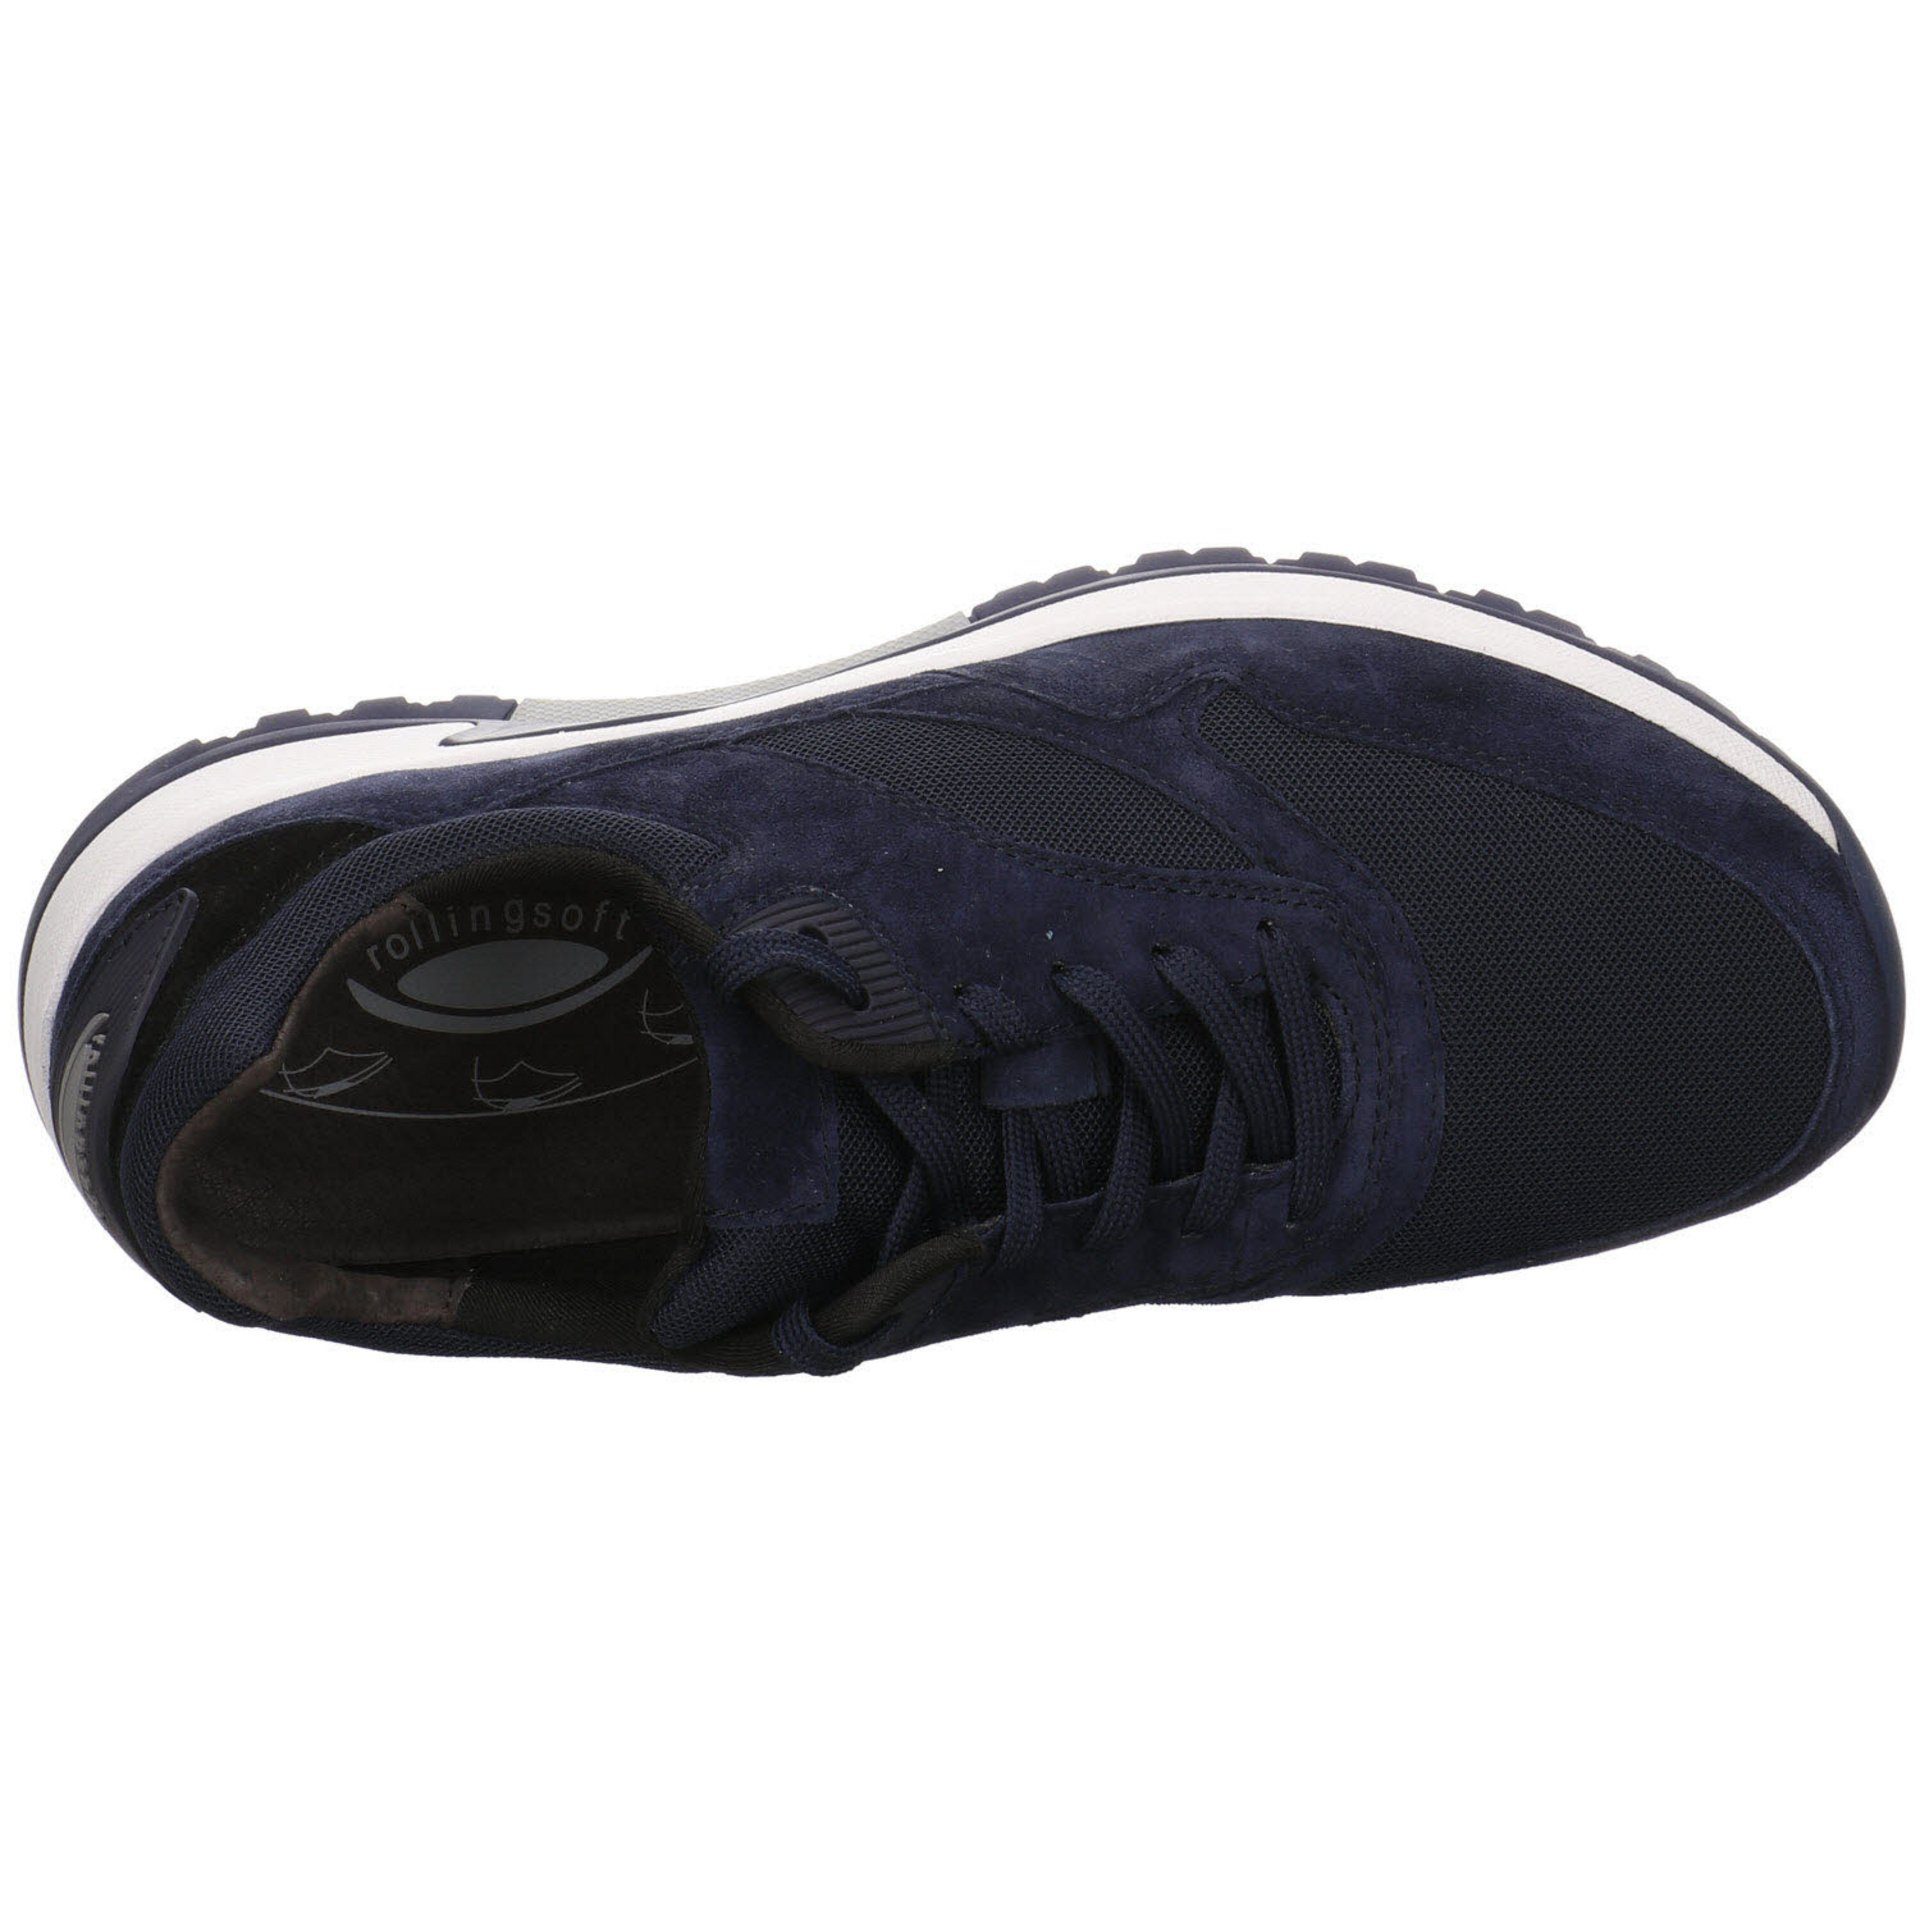 Pius Gabor Herren Sneaker Schuhe Rollingsoft Sneaker blau Schnürschuh Leder-/Textilkombination dunkel